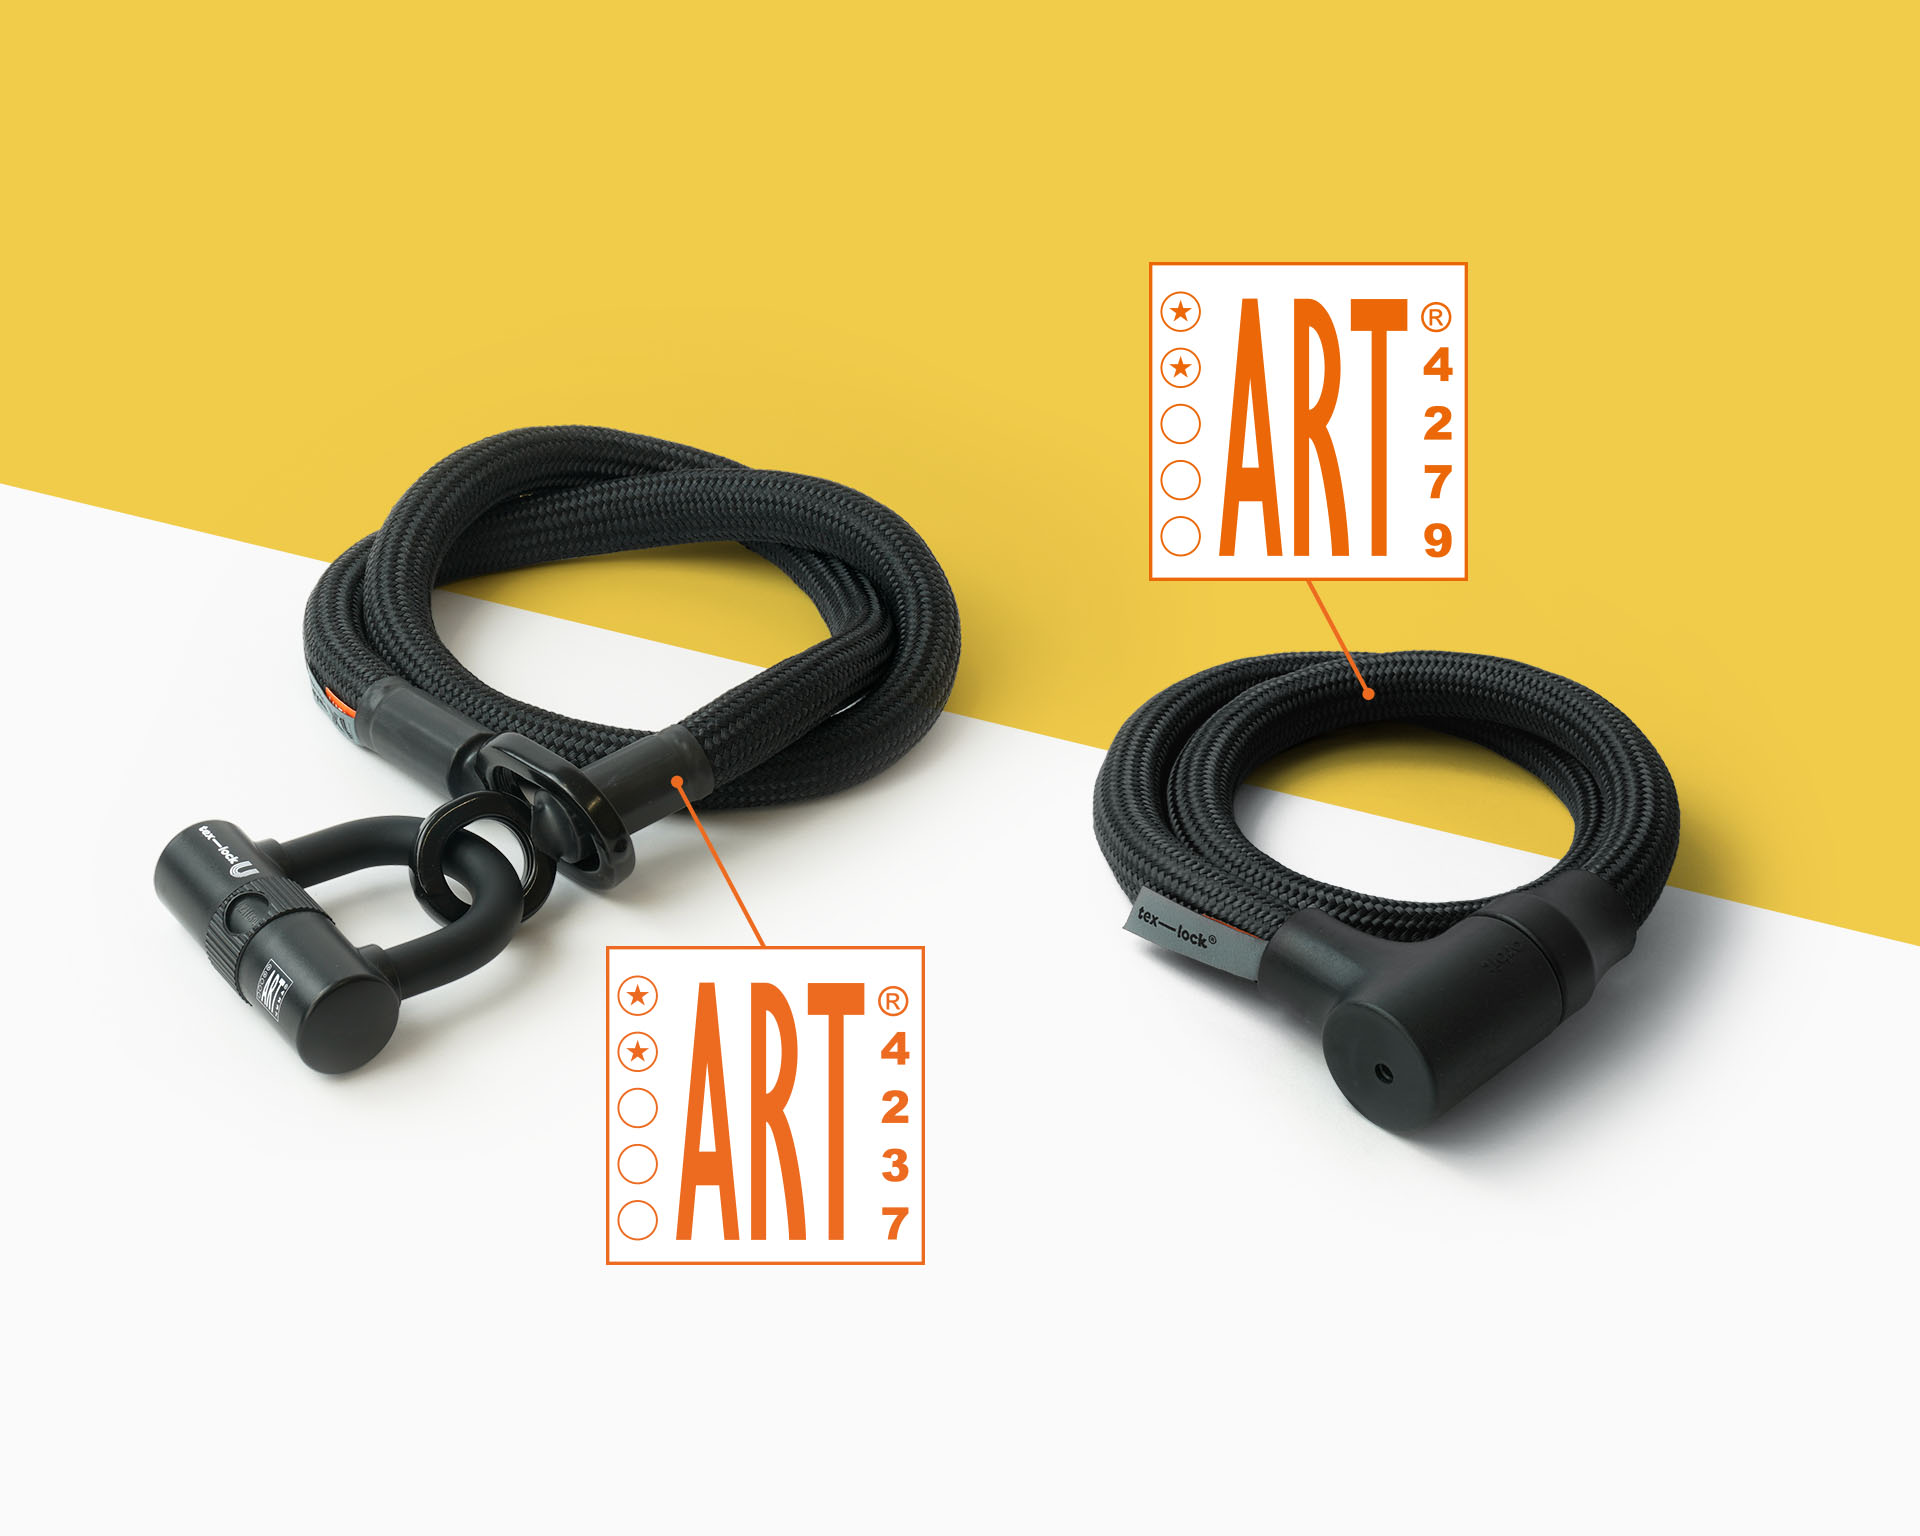 Flexible shackle lock extension tex-lock eyelet  black with U-Lock and rope lock orbit black with ART2 certificate logos